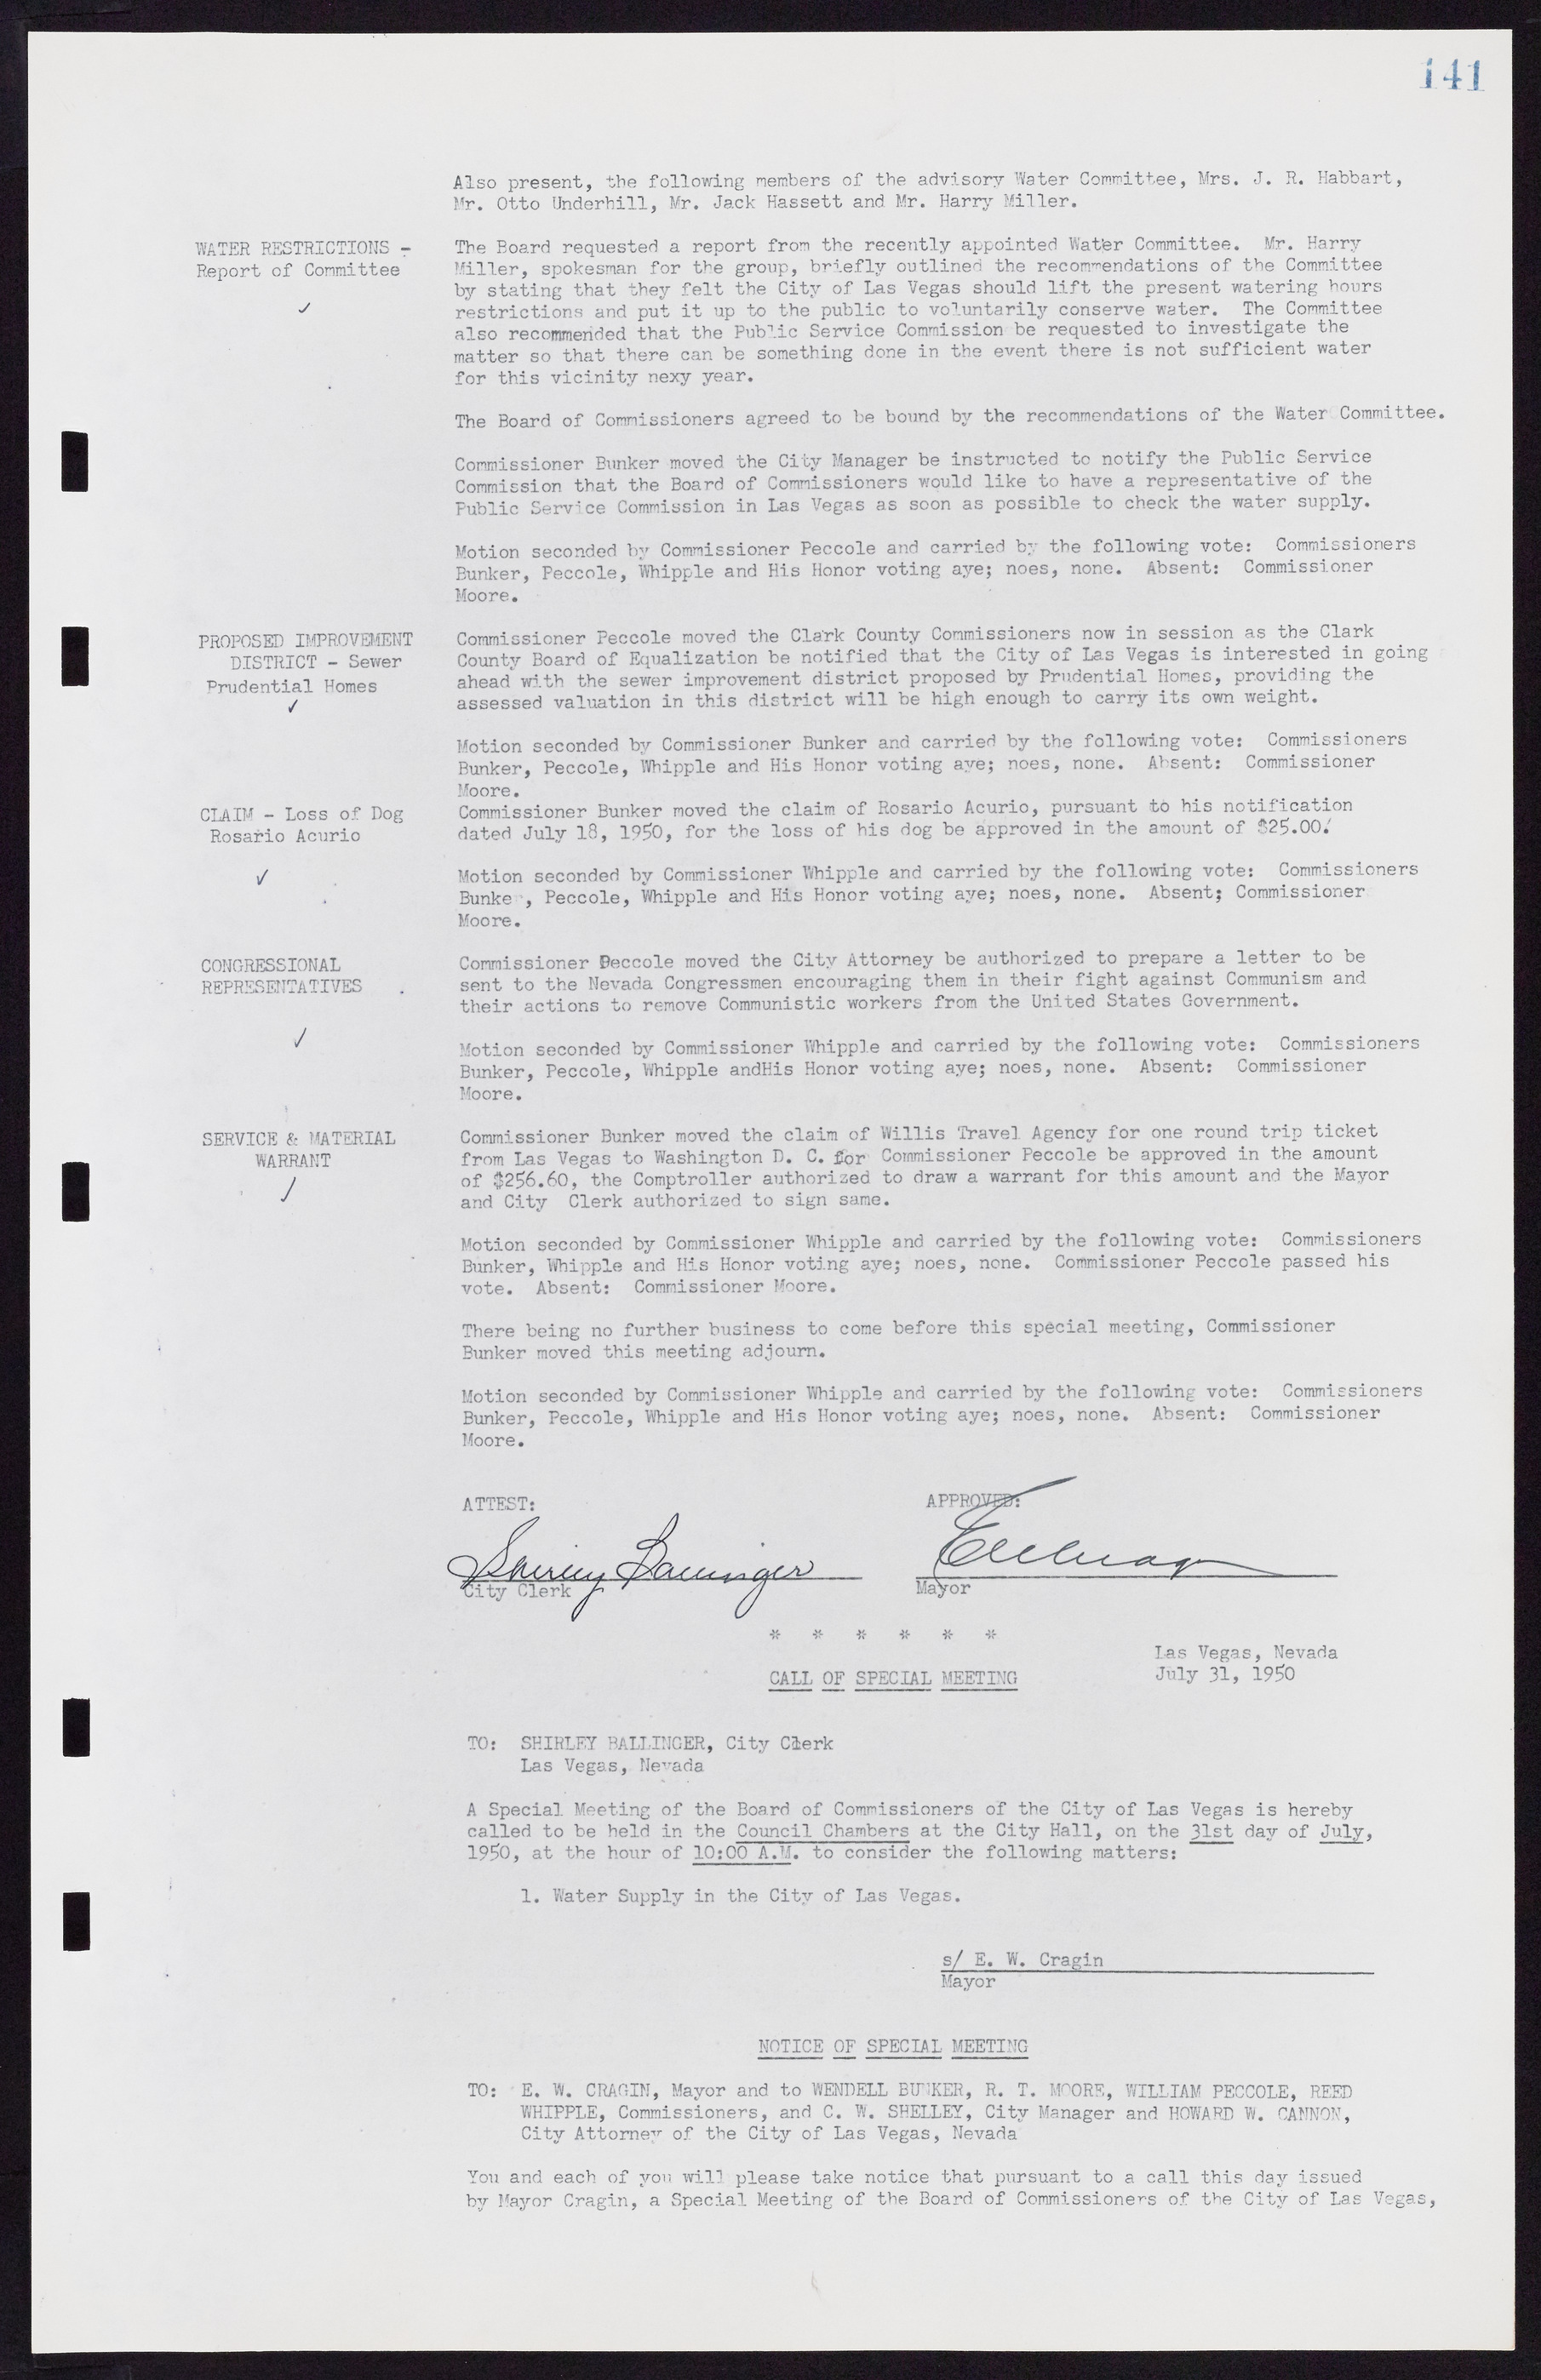 Las Vegas City Commission Minutes, November 7, 1949 to May 21, 1952, lvc000007-151